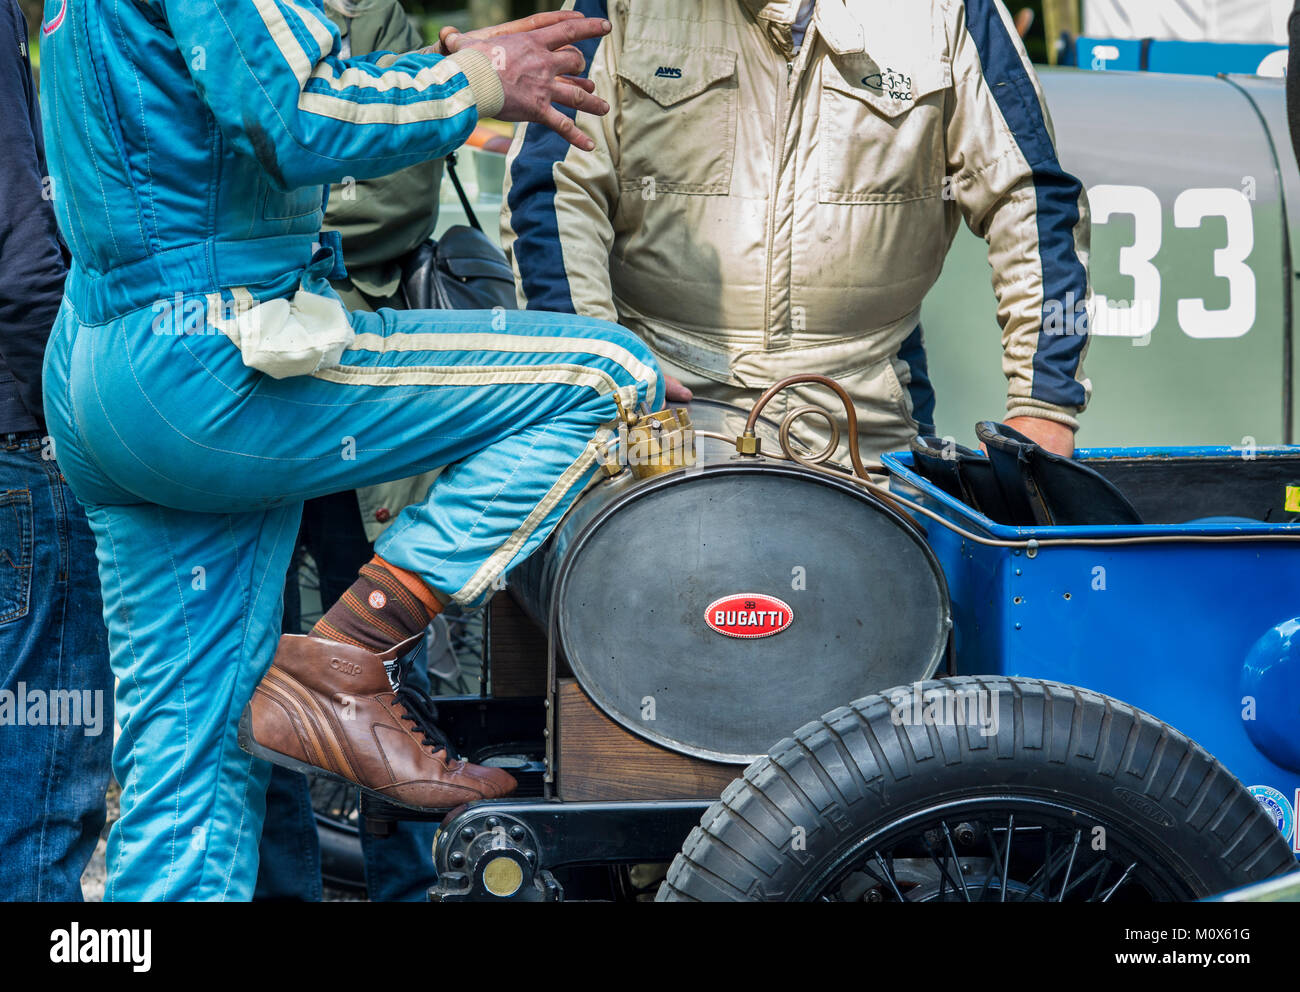 Bugatti propietarios / controladores de pie por un Coche Bugatti vintage. UK Foto de stock